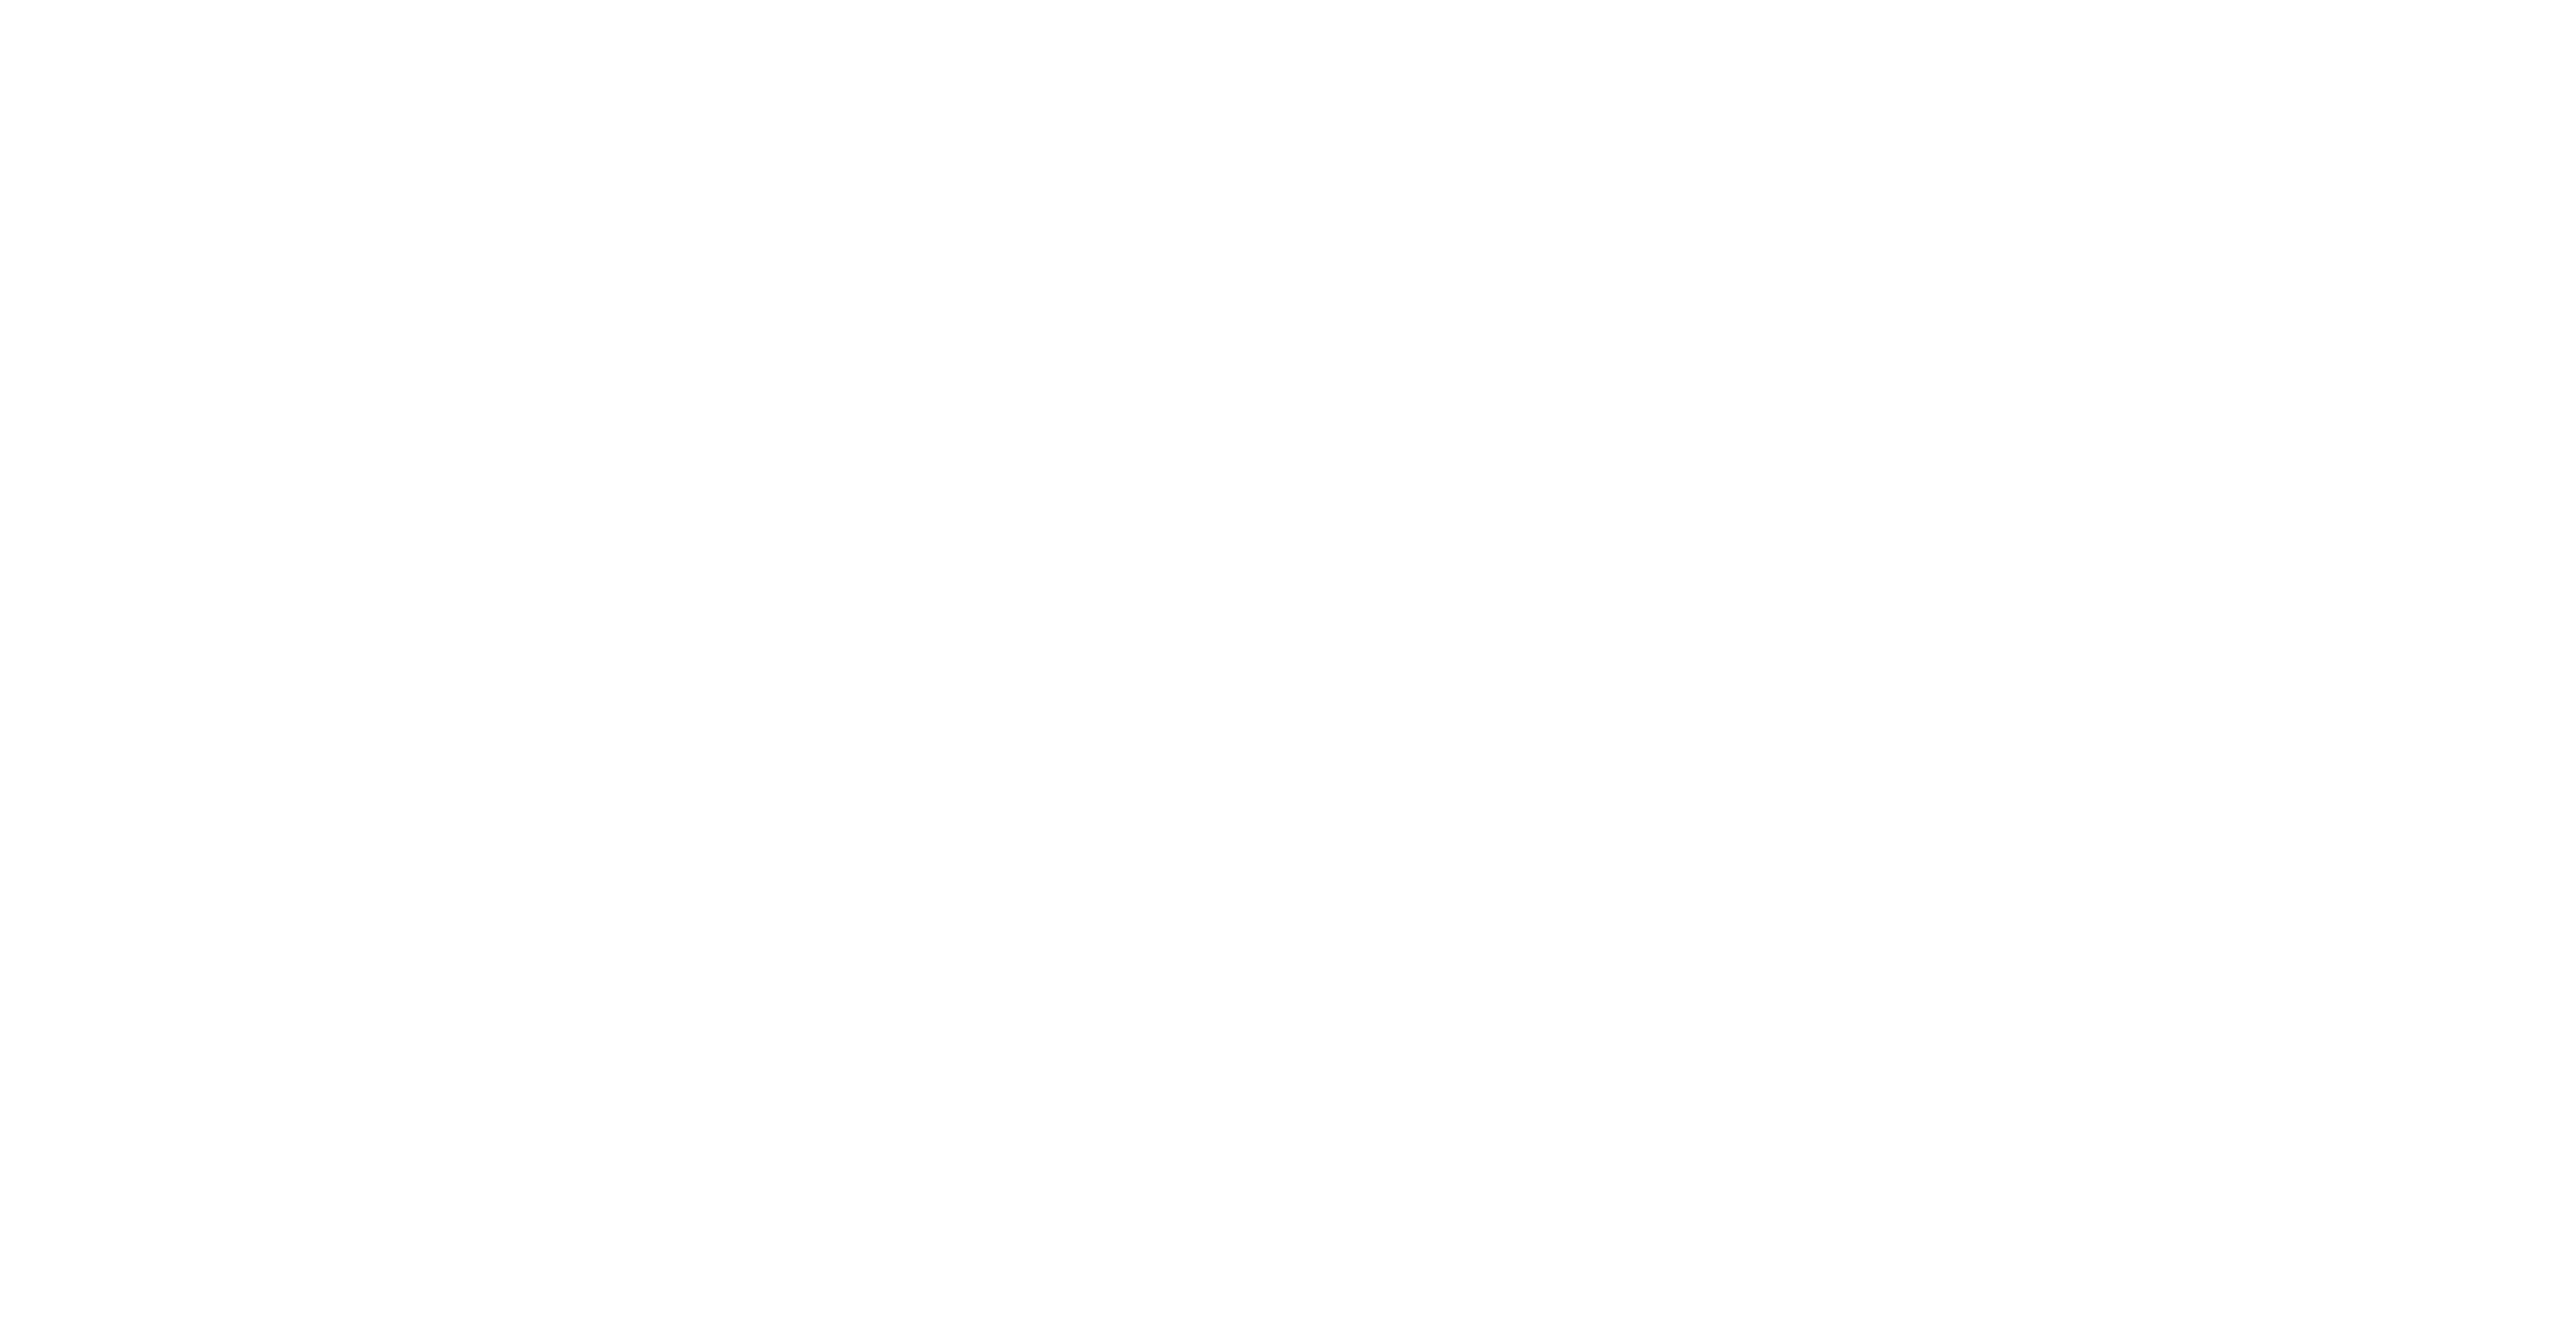 RealEstateStore.png